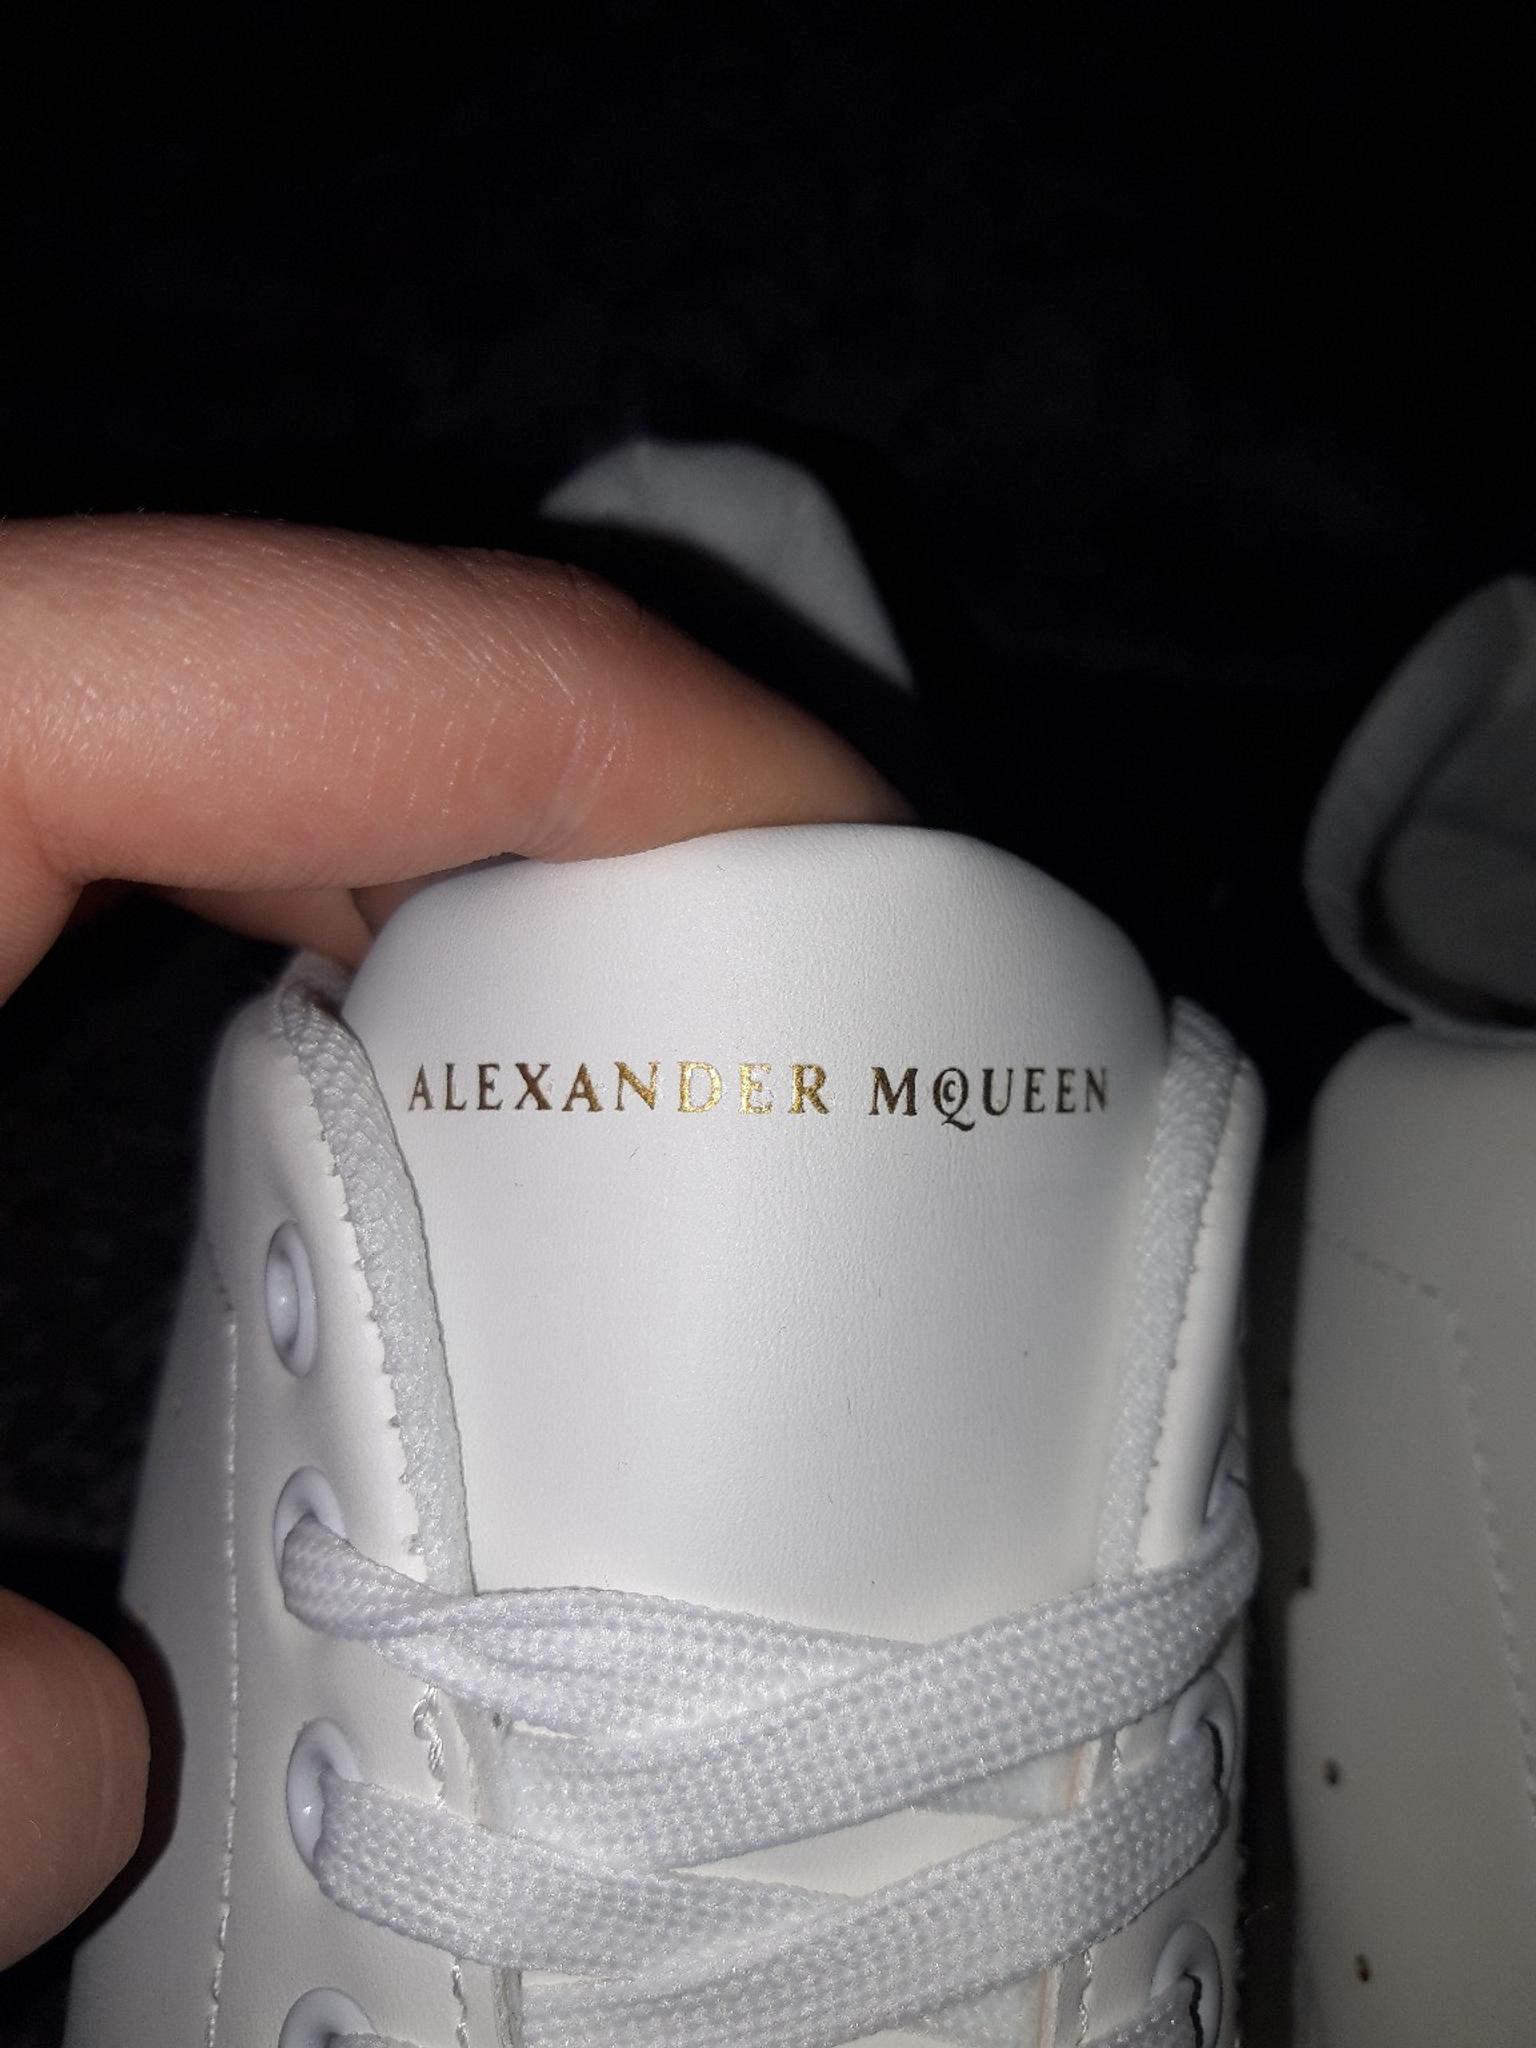 alexander mcqueen shoes size 5